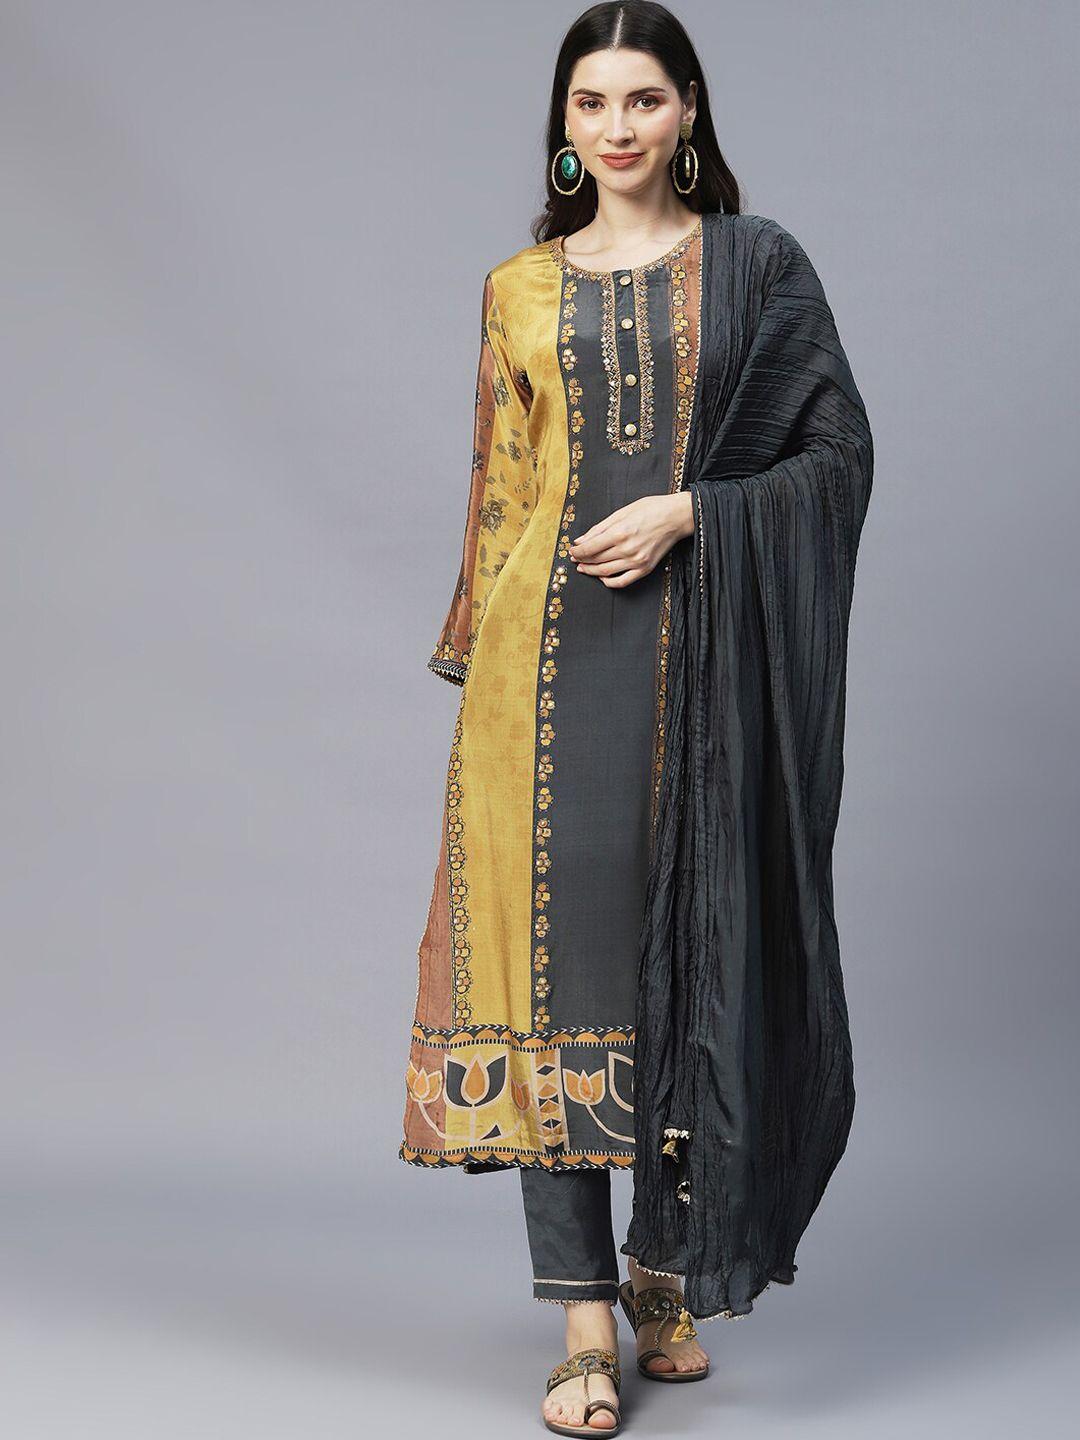 envy me by fashor women mustard yellow & grey embroidered straight kurta set